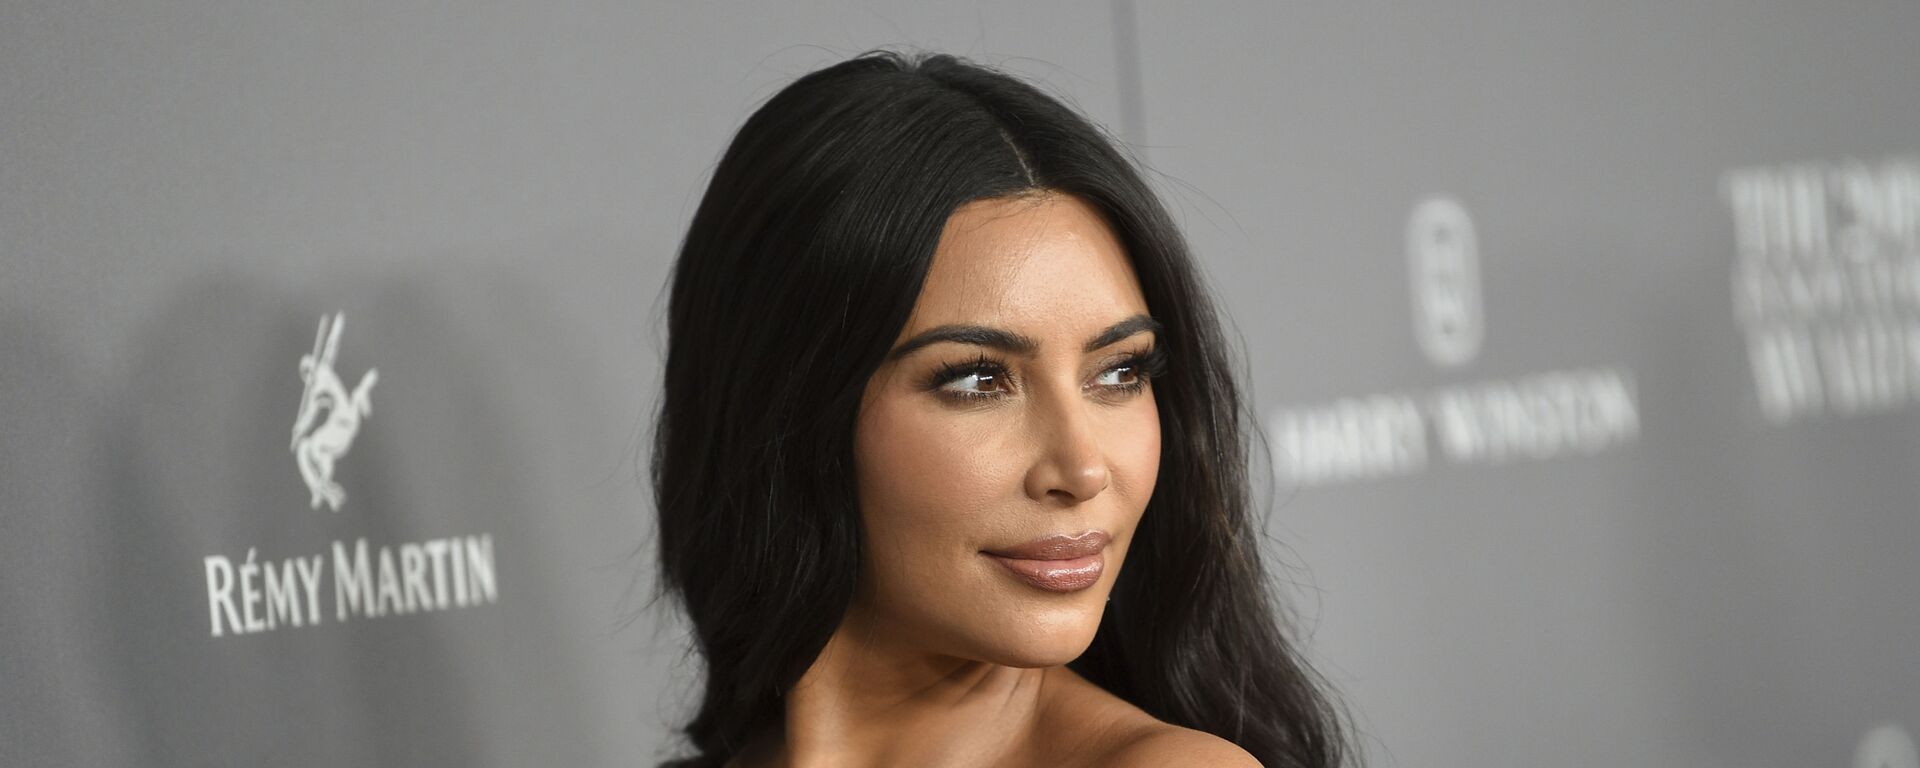 Television personality Kim Kardashian West attends the WSJ. Magazine 2019 Innovator Awards at the Museum of Modern Art on Wednesday, Nov. 6, 2019, in New York. - Sputnik International, 1920, 07.04.2021